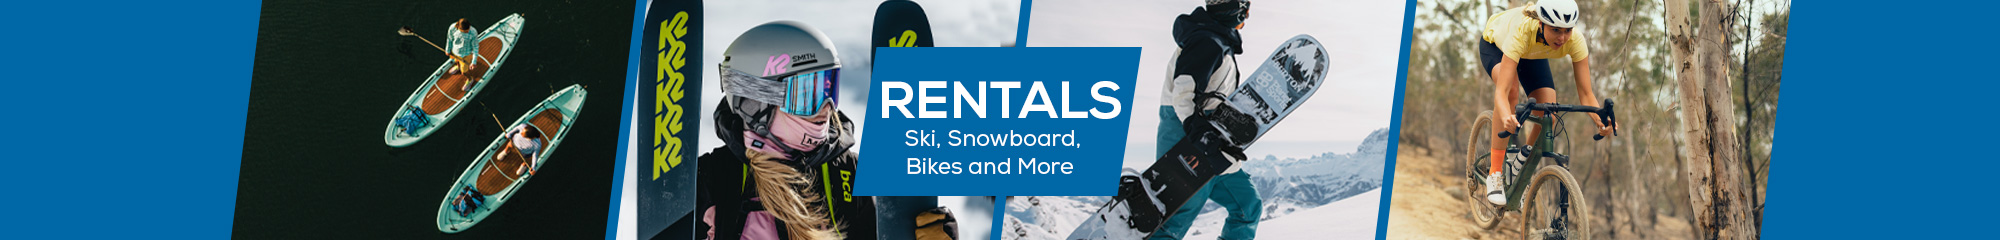 Rentals: Ski, Snowboard, Bikes, and more